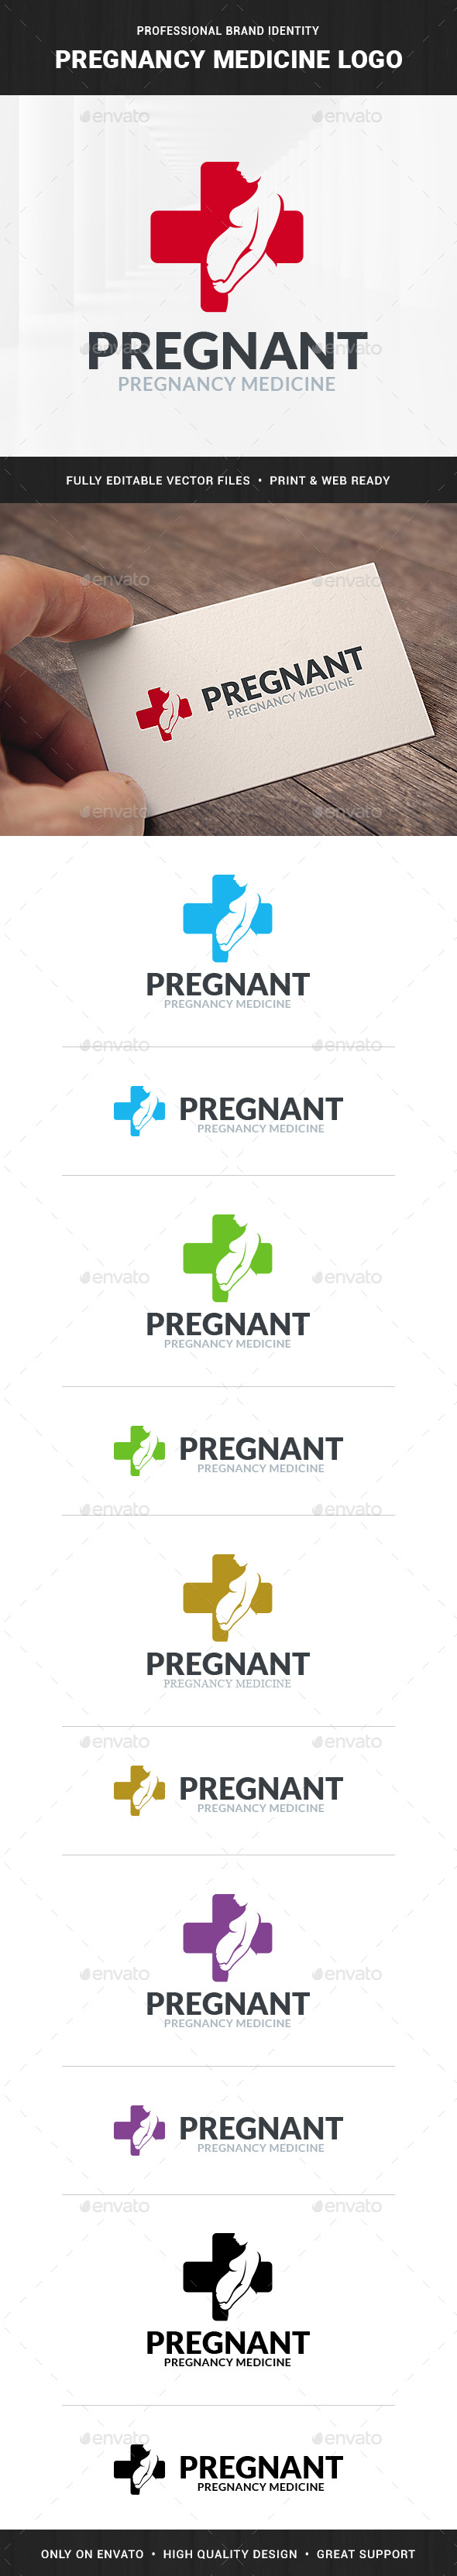 Pregnancy Medicine Logo Template